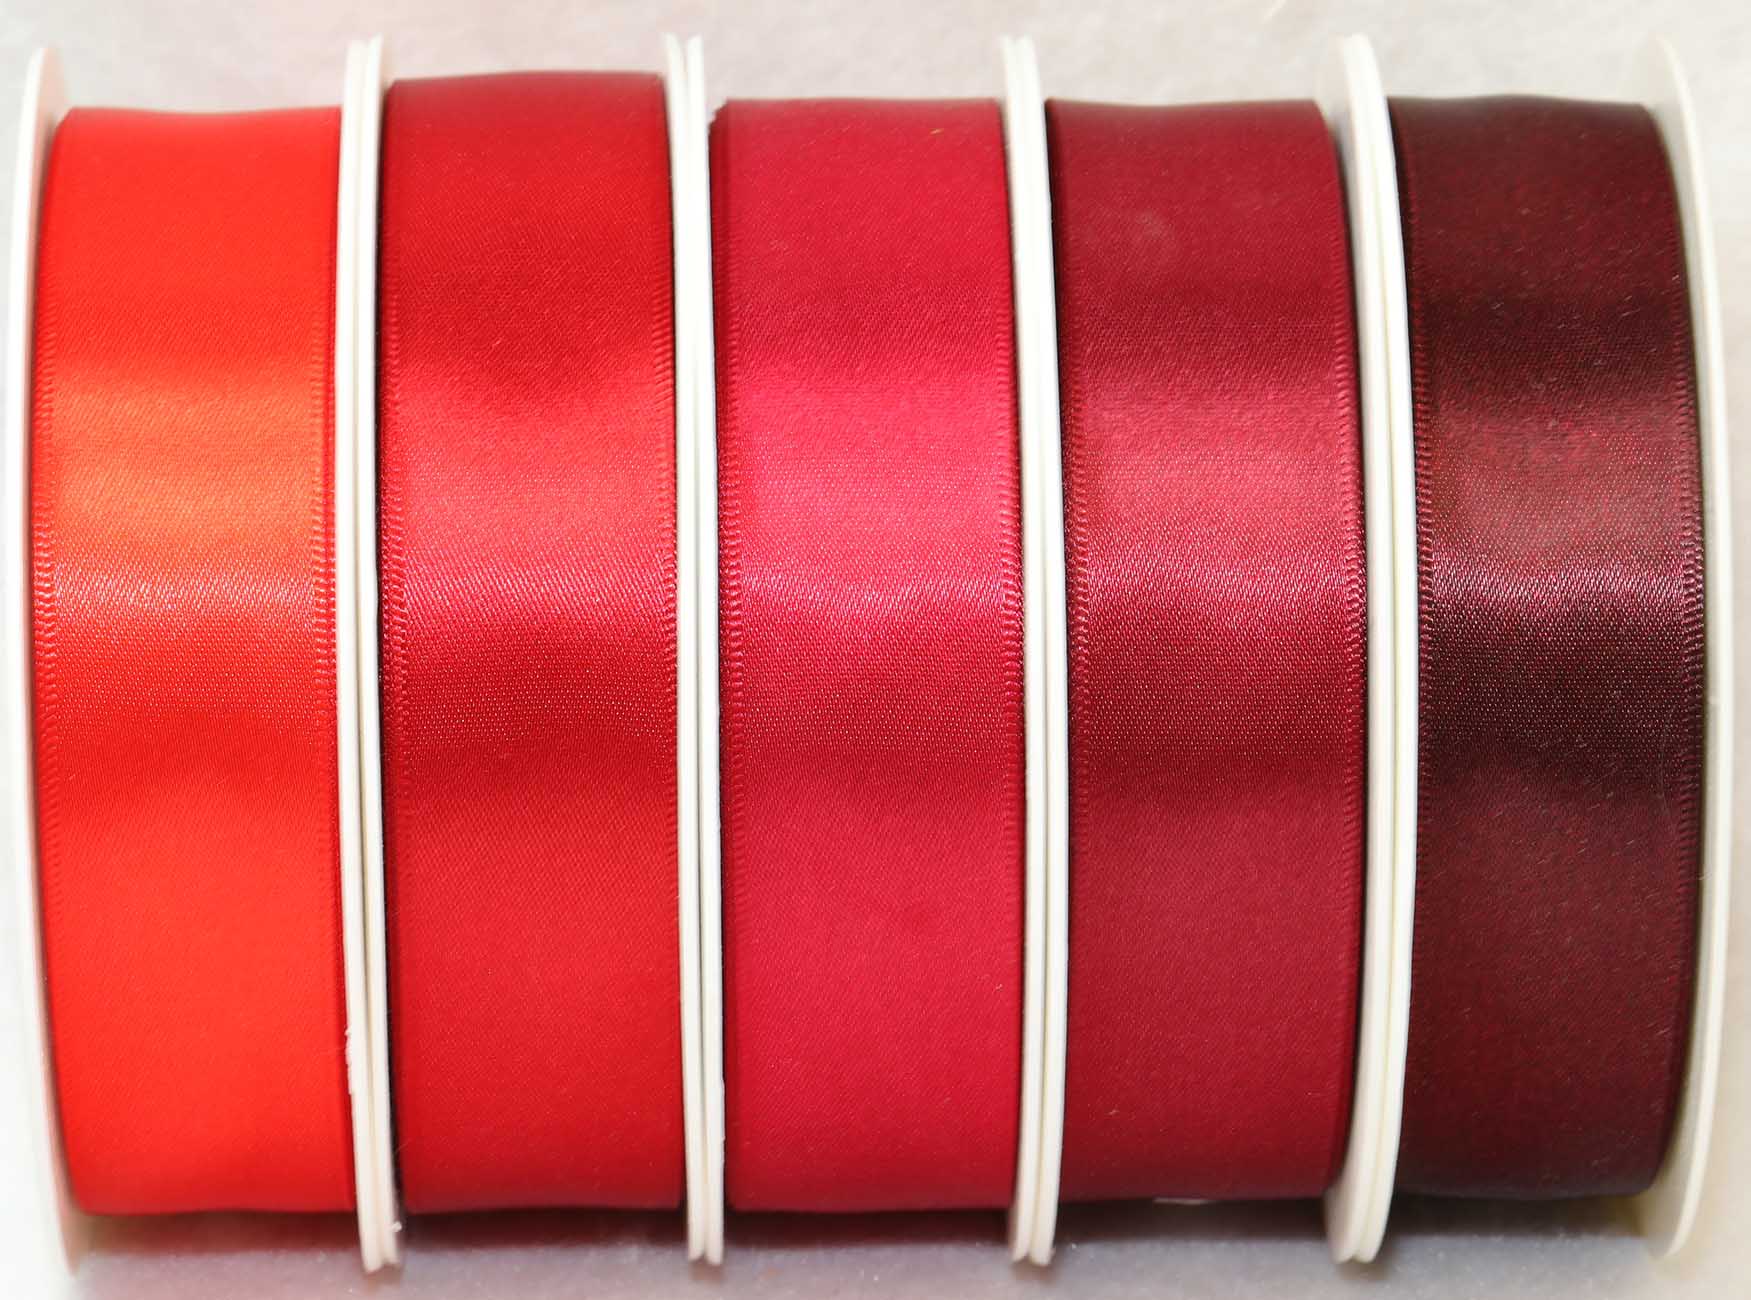 1.5” Wired Ribbon in solid deep Burgundy ribbon, solid, maroon ribbon, wine  ribbon